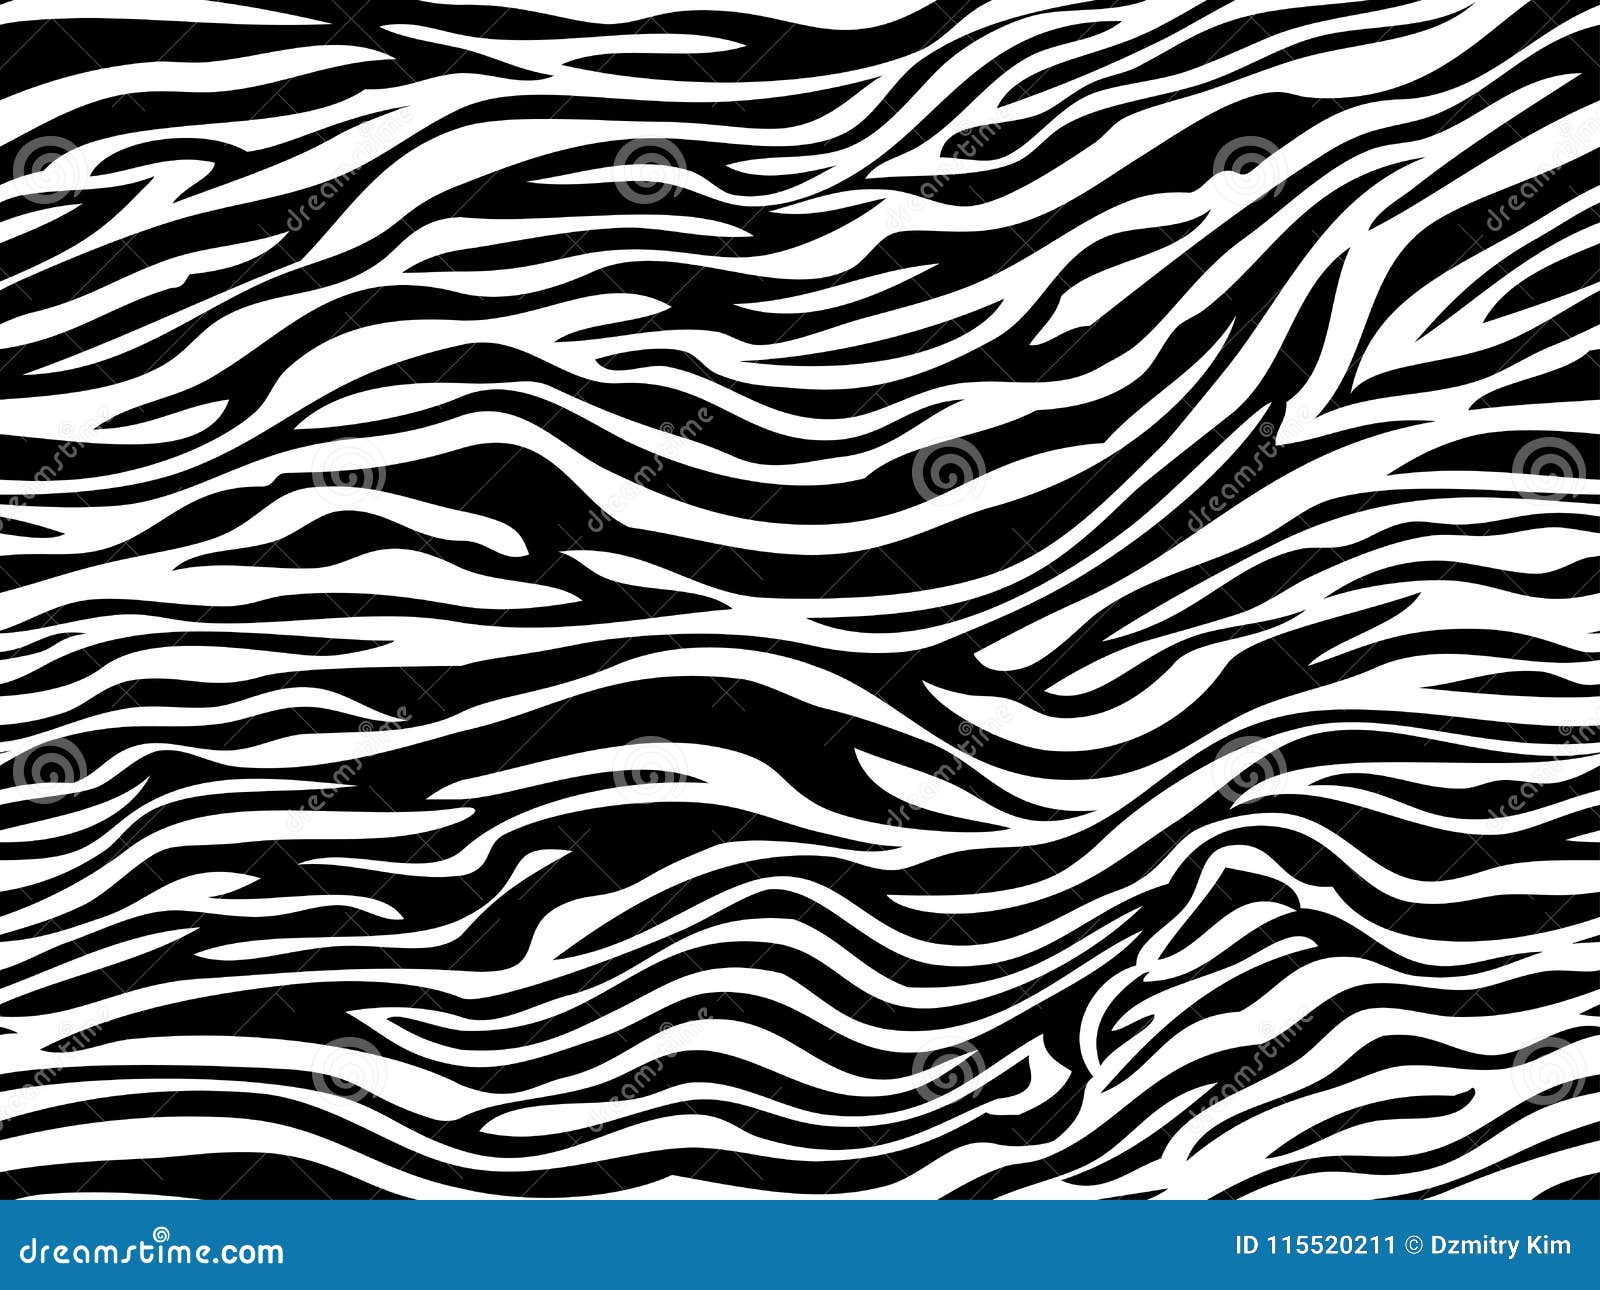 stripe animals jungle tiger zebra fur texture pattern seamless repeating white black